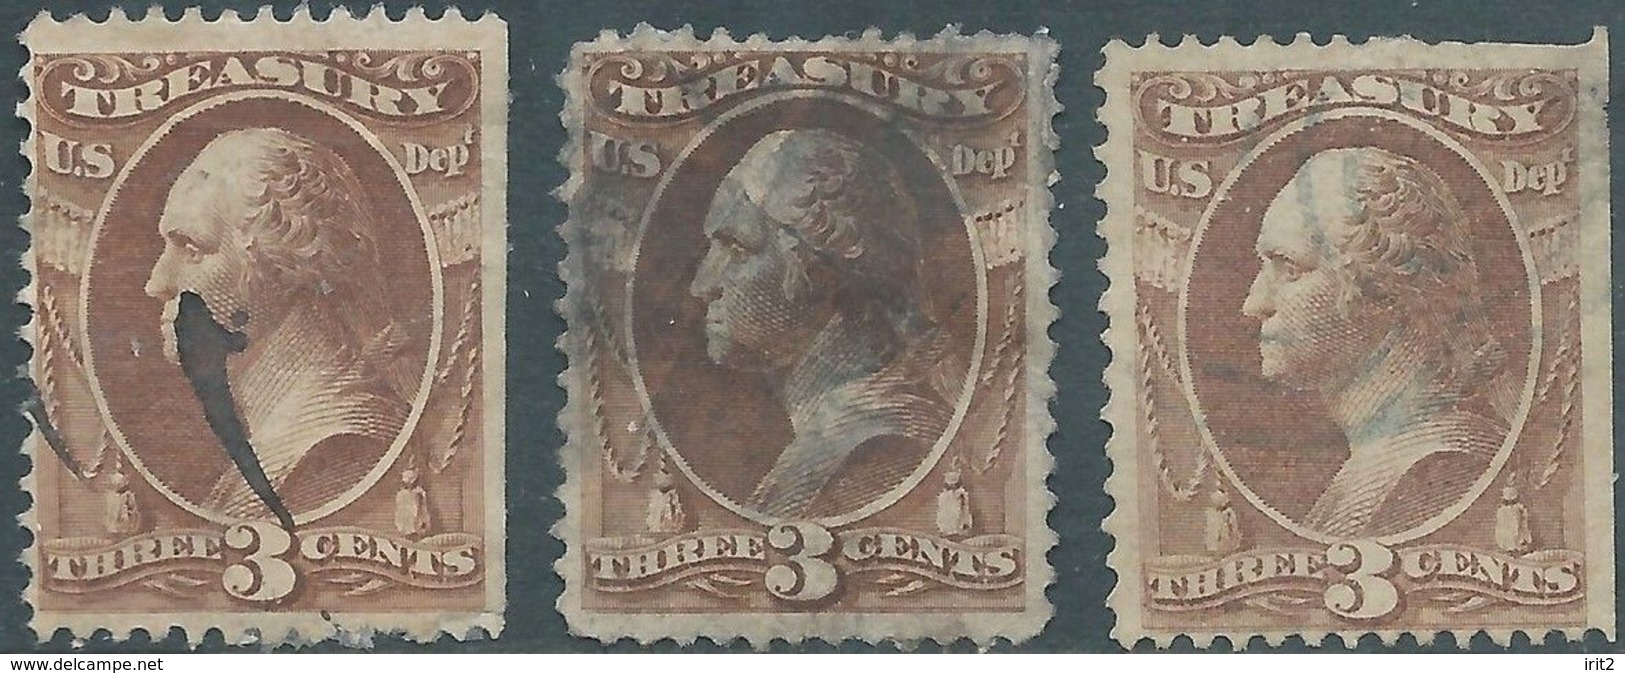 Stati Uniti D'america,United States,U.S.A,1873 Revenue Stamps 3c MINISTRY OF TREASURY,Used - Service